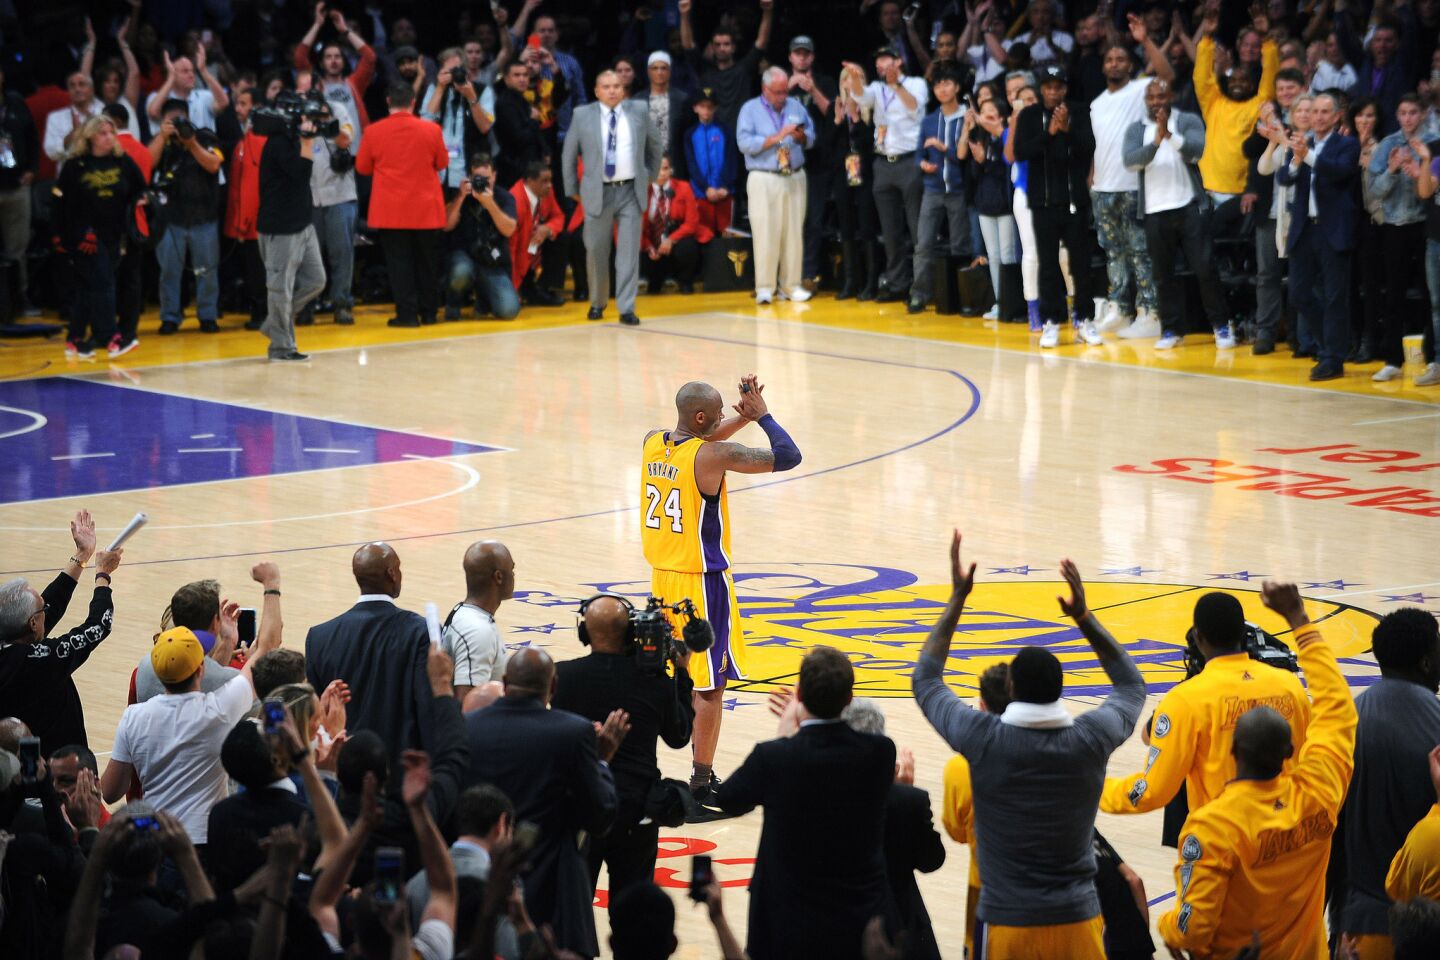 Kobe's last game